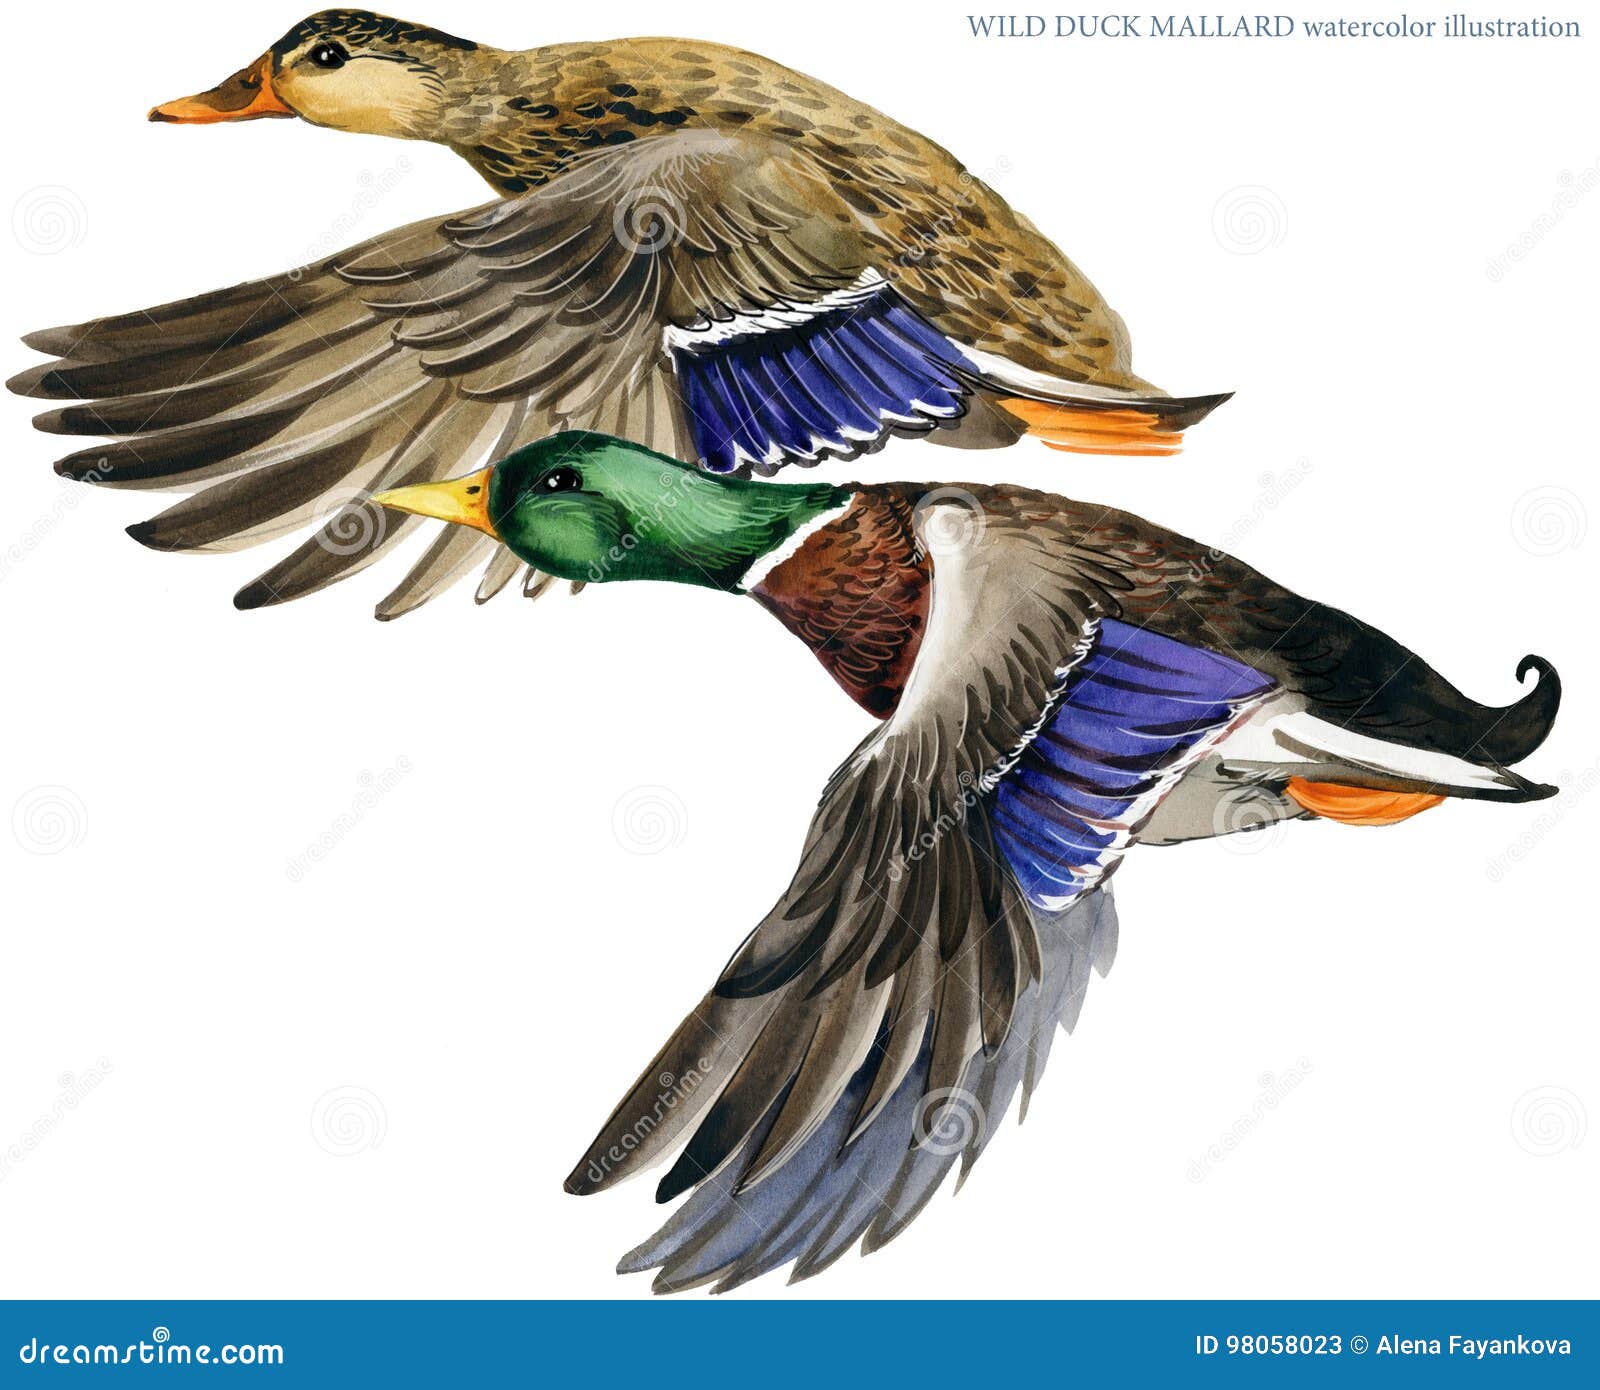 wild duck mallard watercolor .